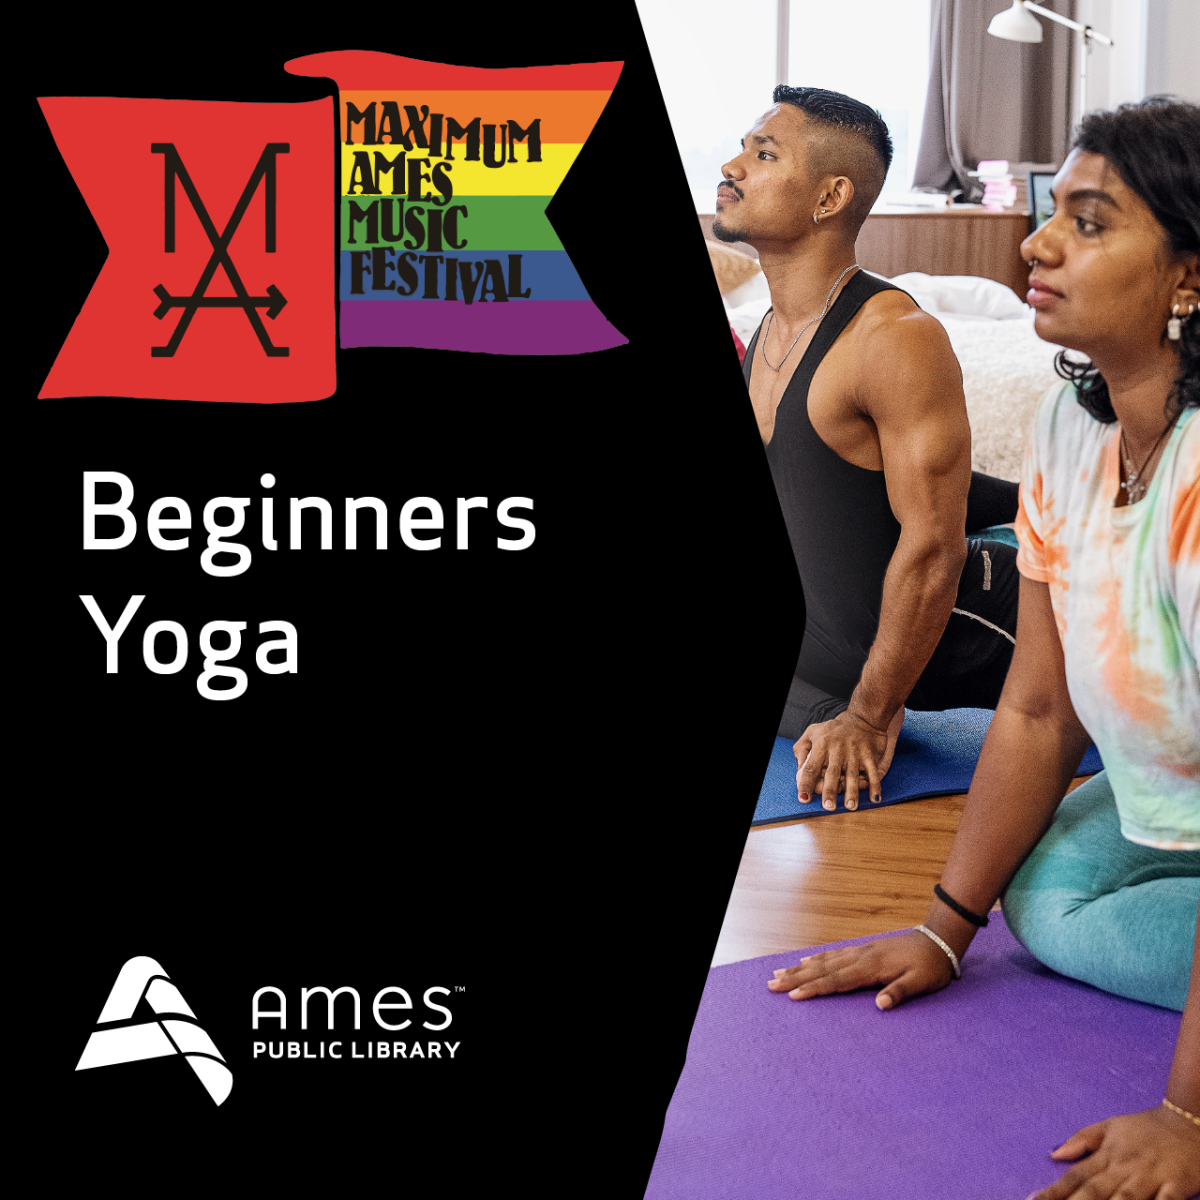 Maximum Ames Music Festival: Beginners Yoga